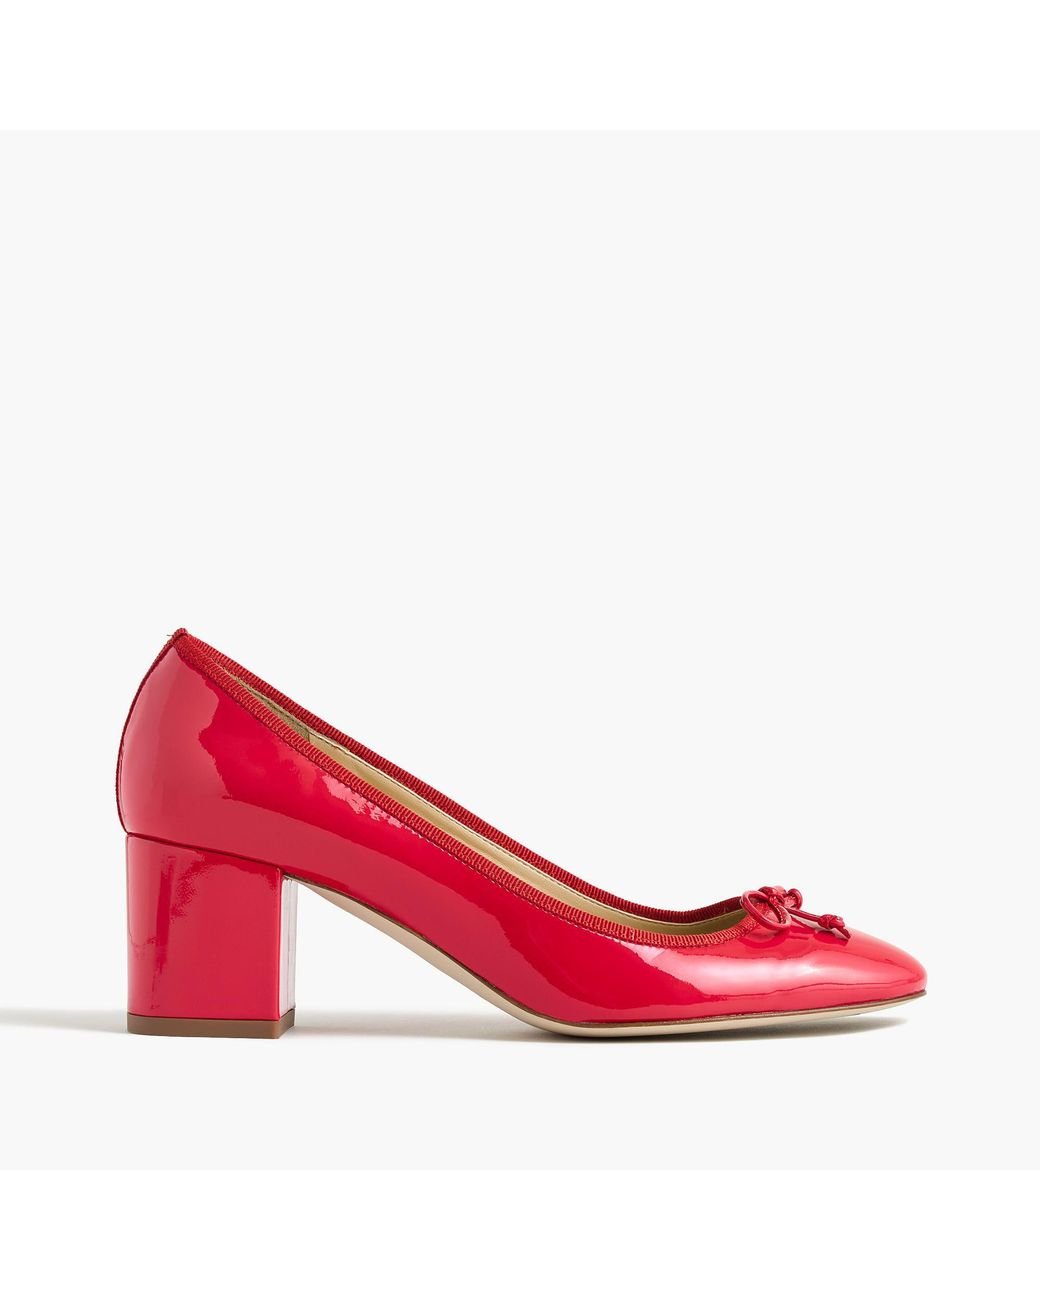 J. CREW Evie Ballet Pump Block Heel Red Patent Leather Size 8